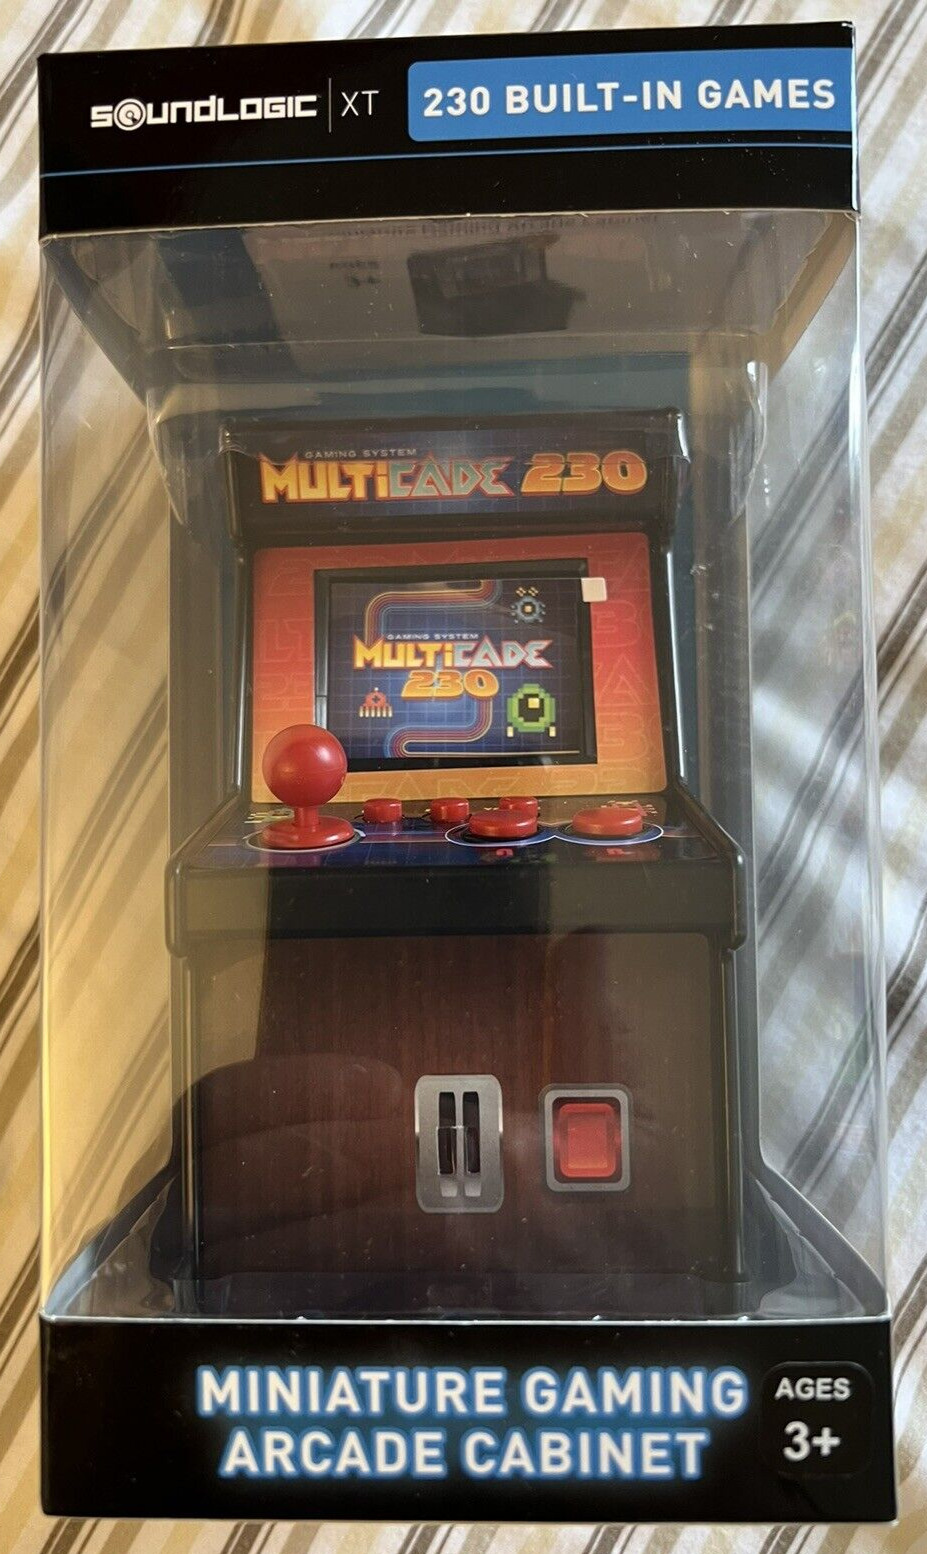 Sound Logic XT Multicade 230 Game Mini Arcade Video Cabinet *NIB* Mint Condition